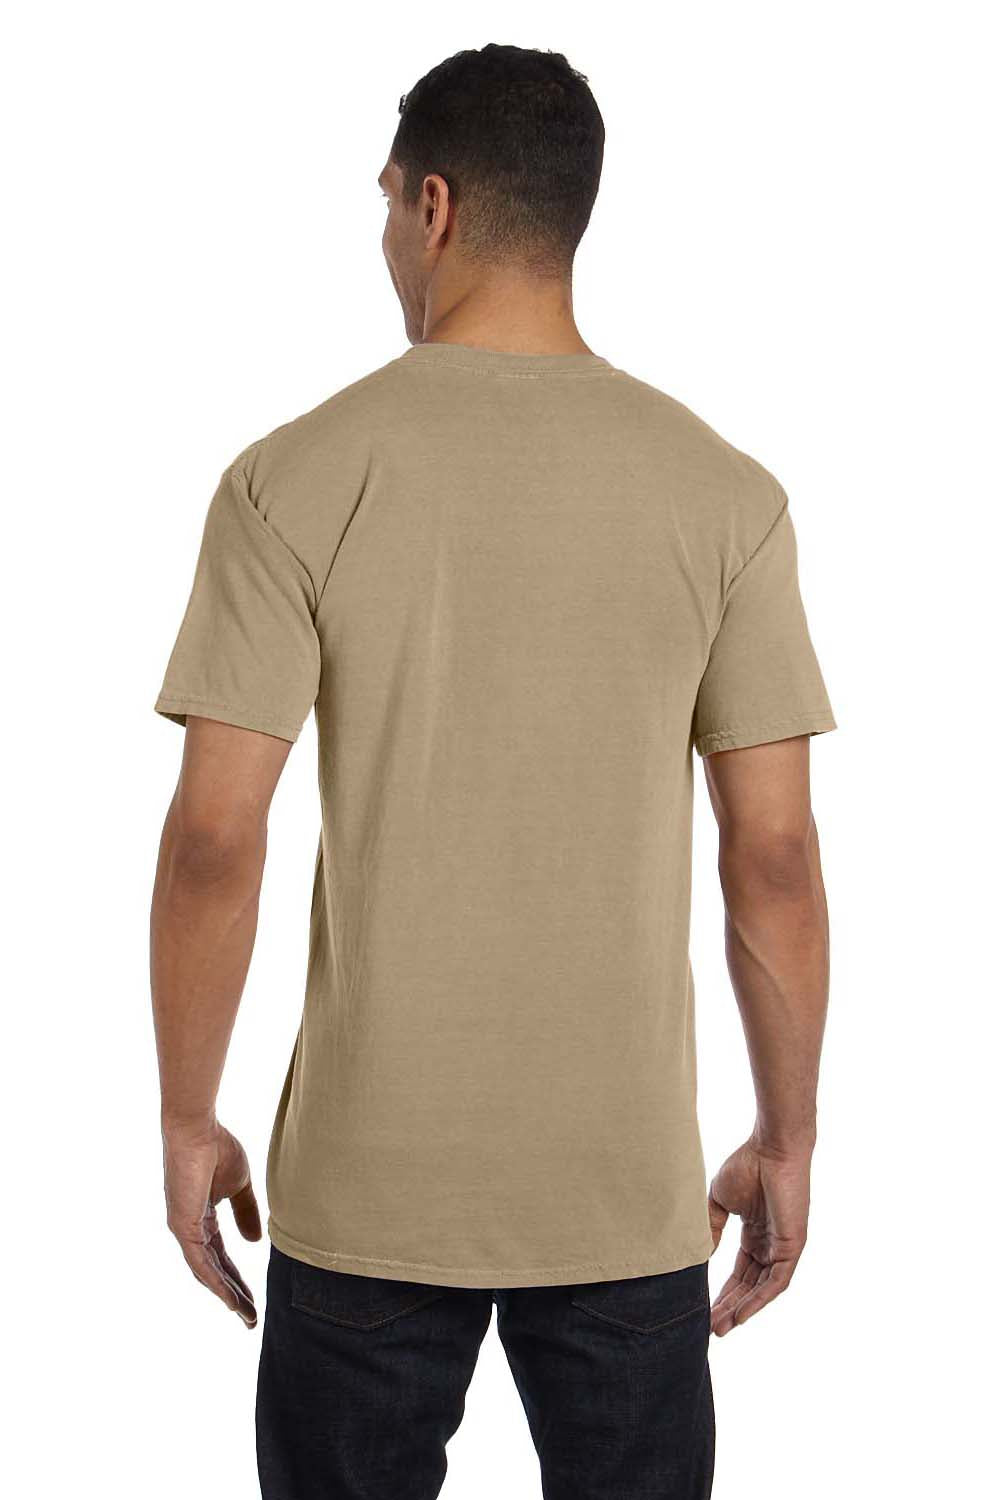 Comfort Colors 6030CC Mens Short Sleeve Crewneck T-Shirt w/ Pocket Khaki Brown Back